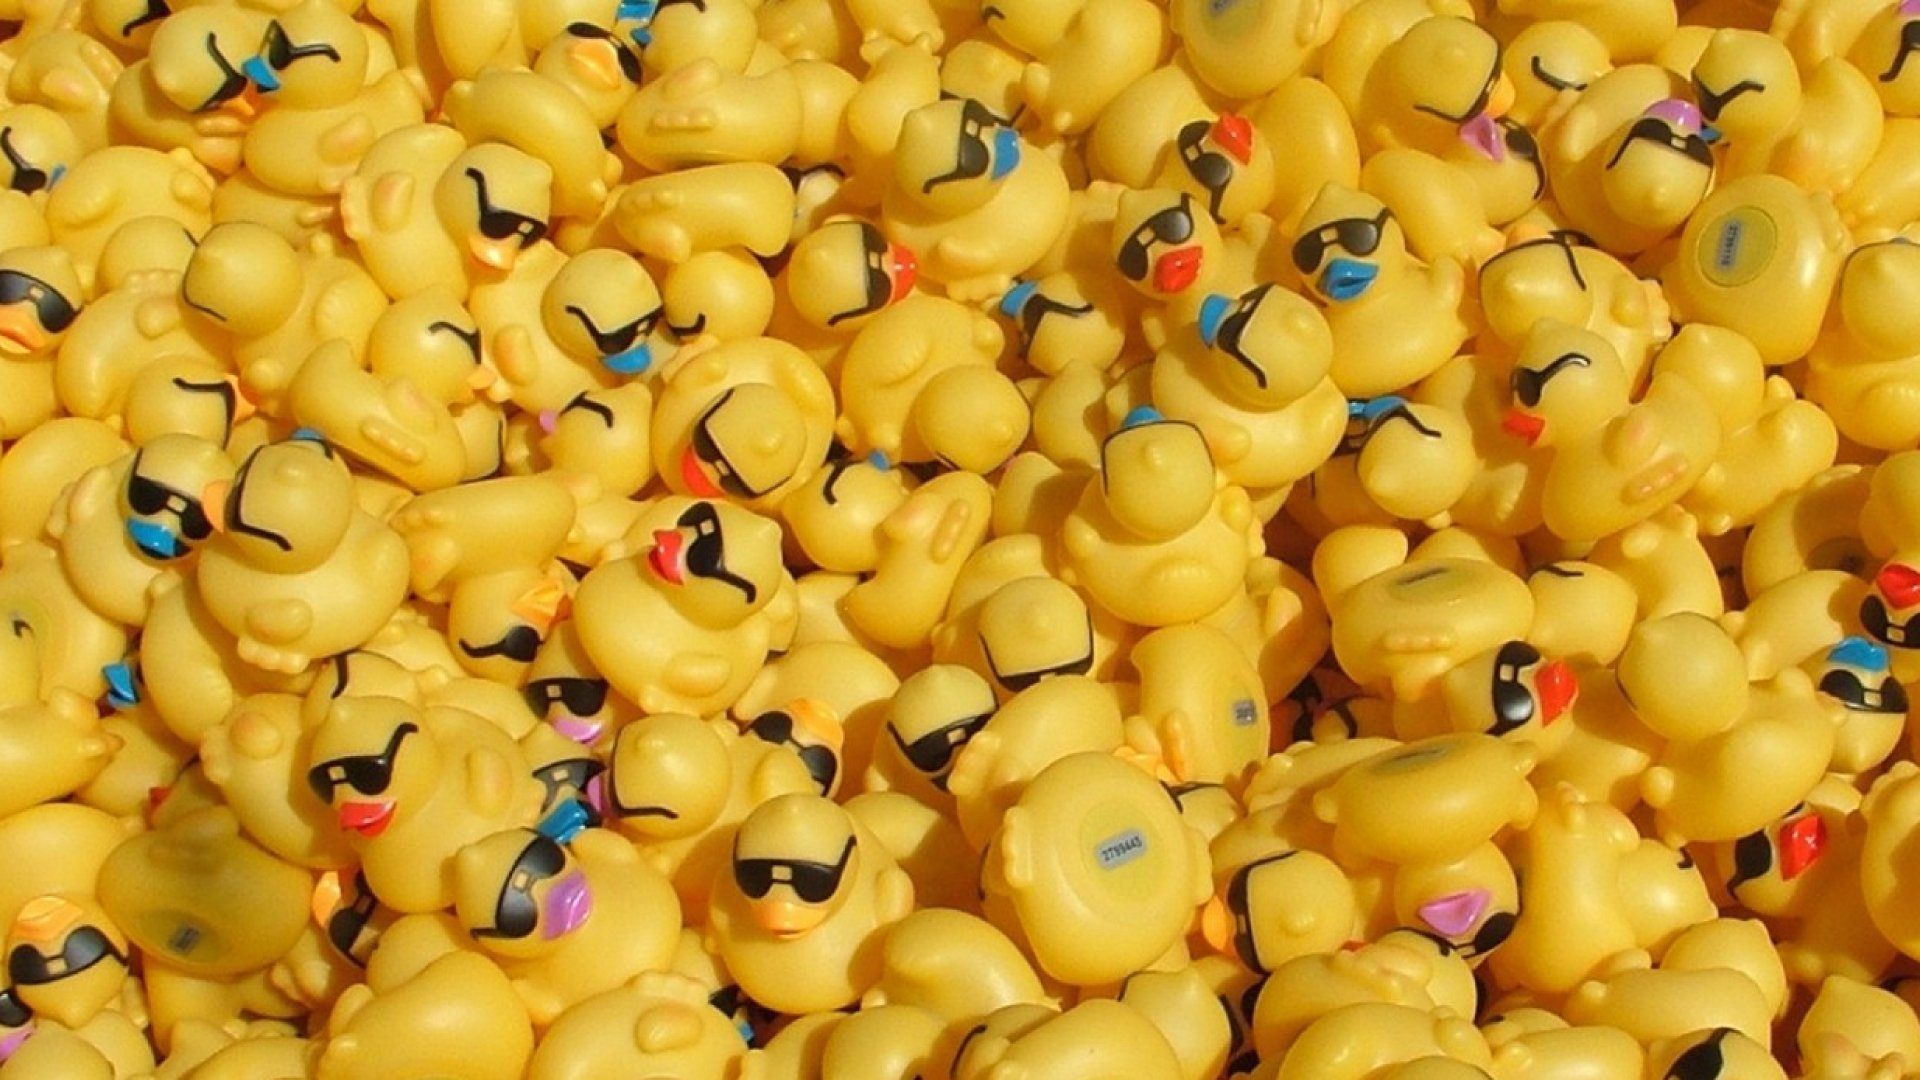 Hundreds of yellow rubber ducks